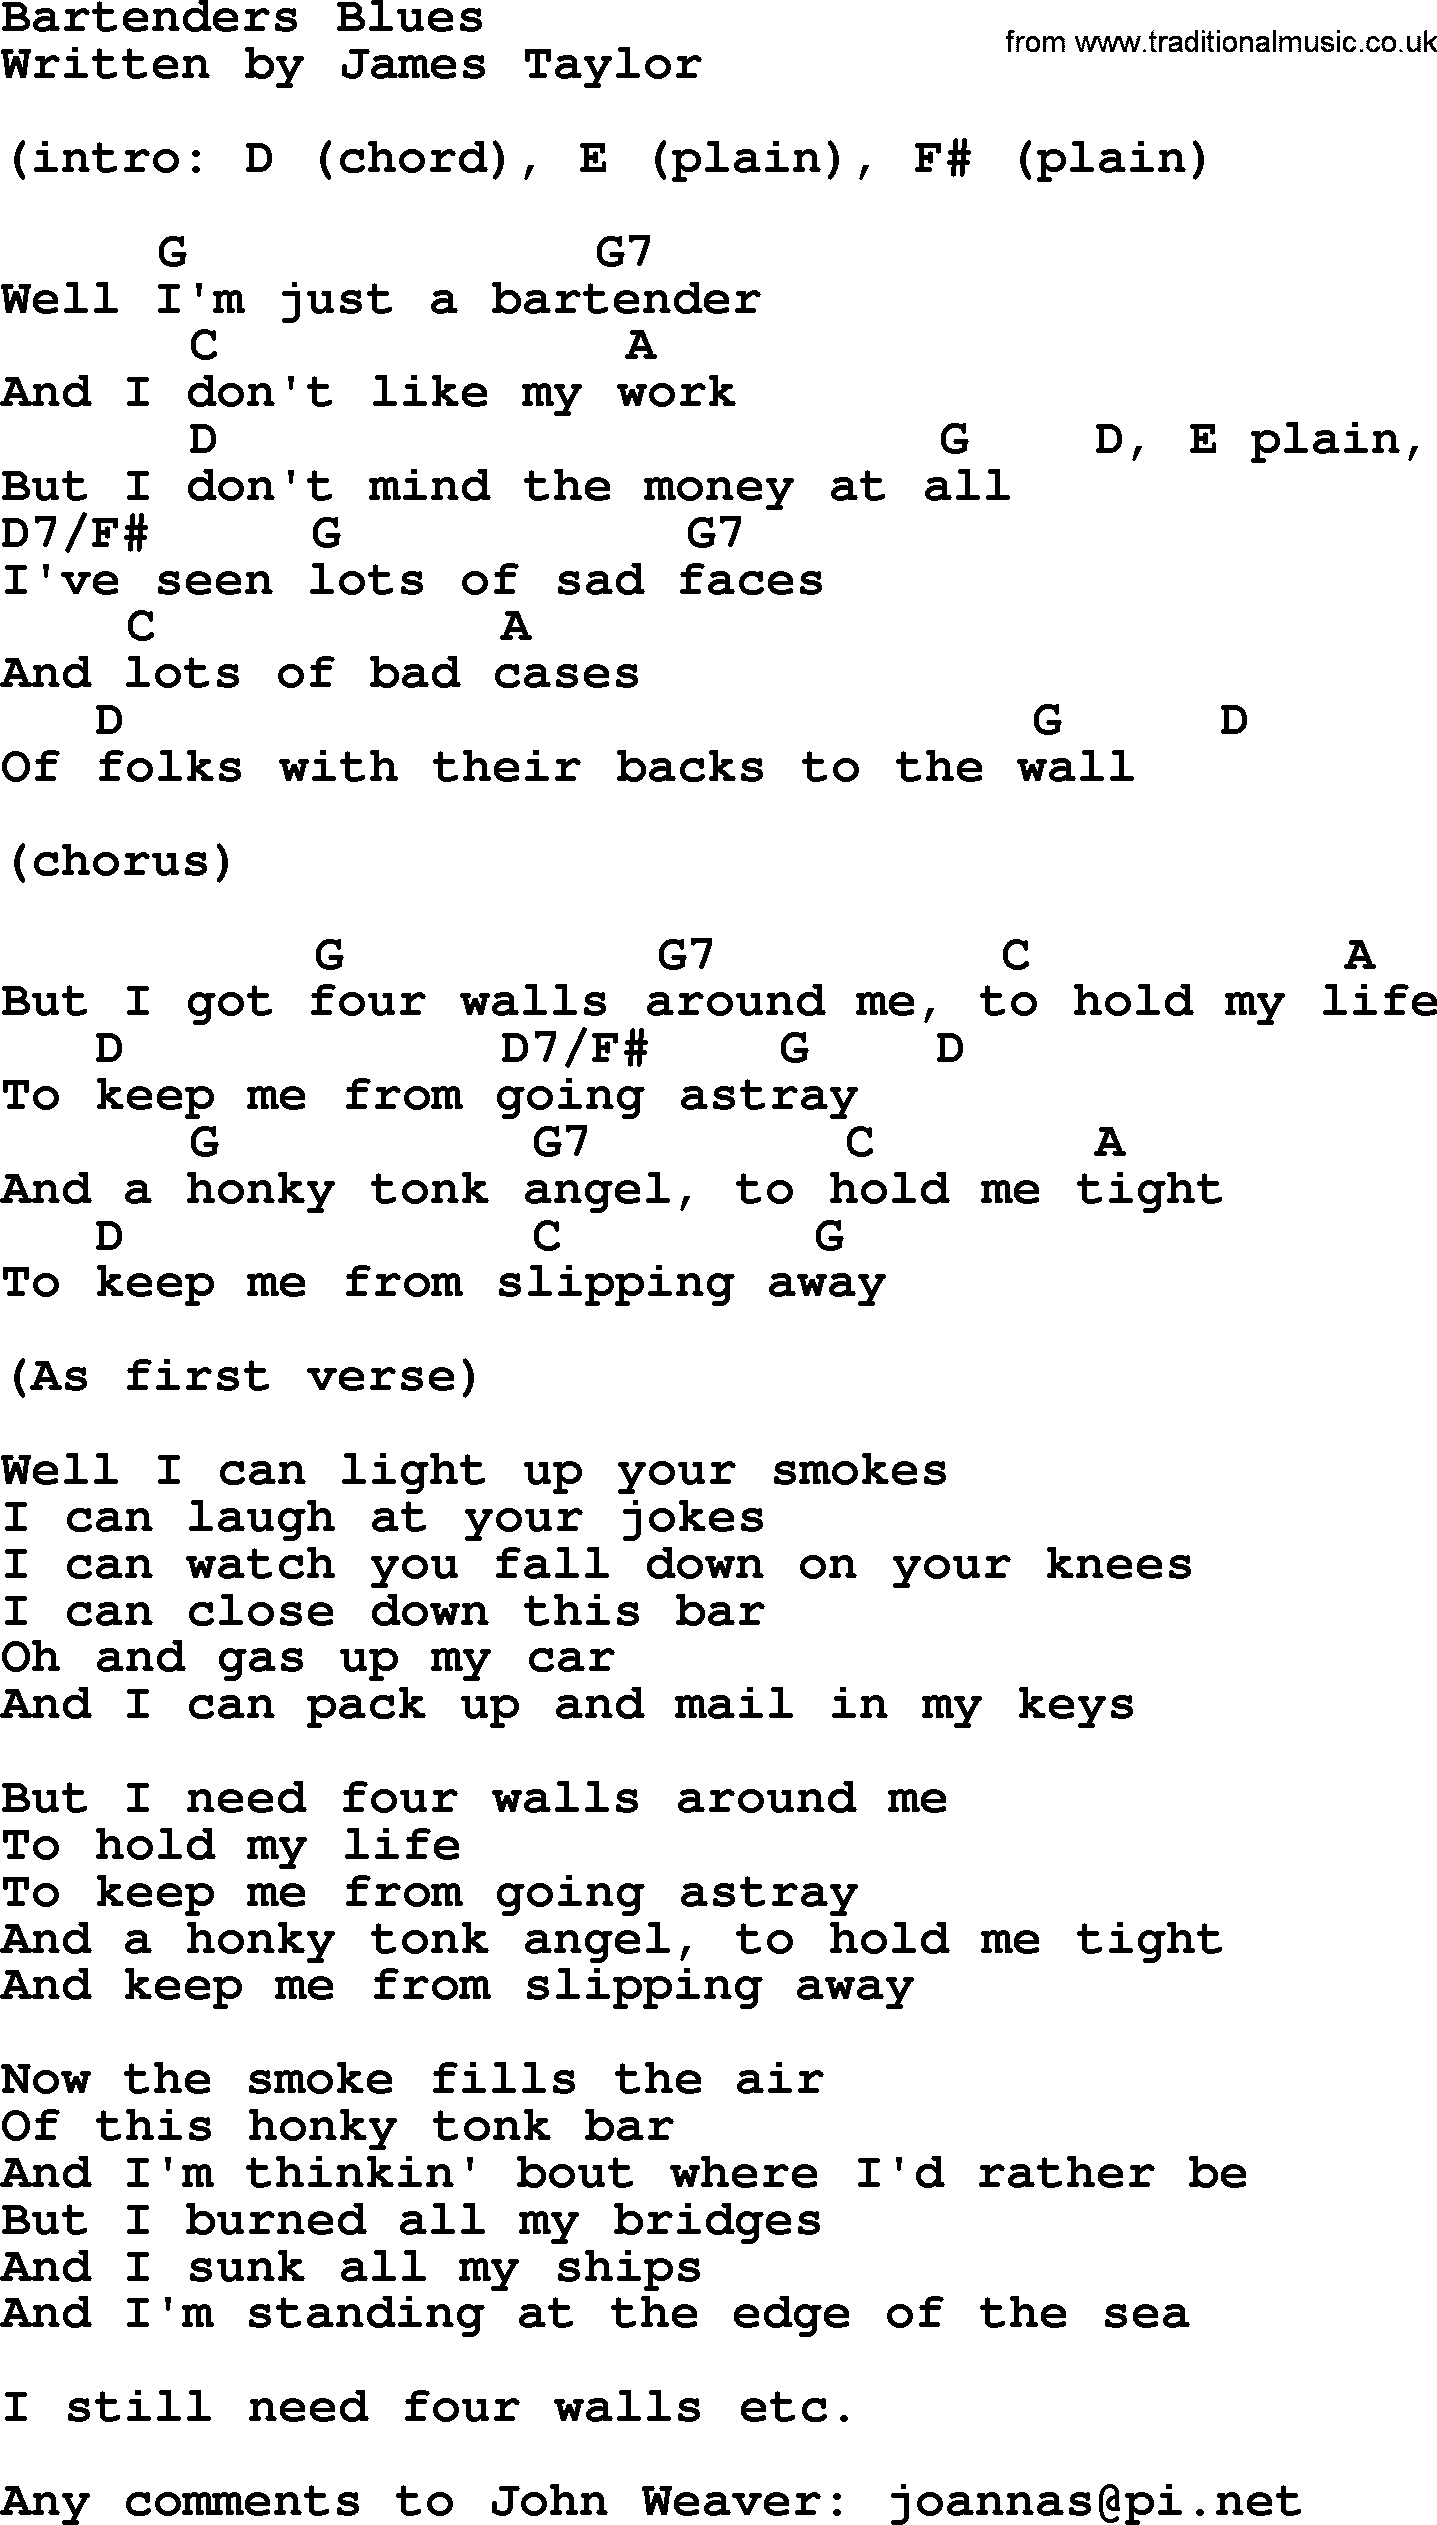 George Jones song: Bartenders Blues, lyrics and chords